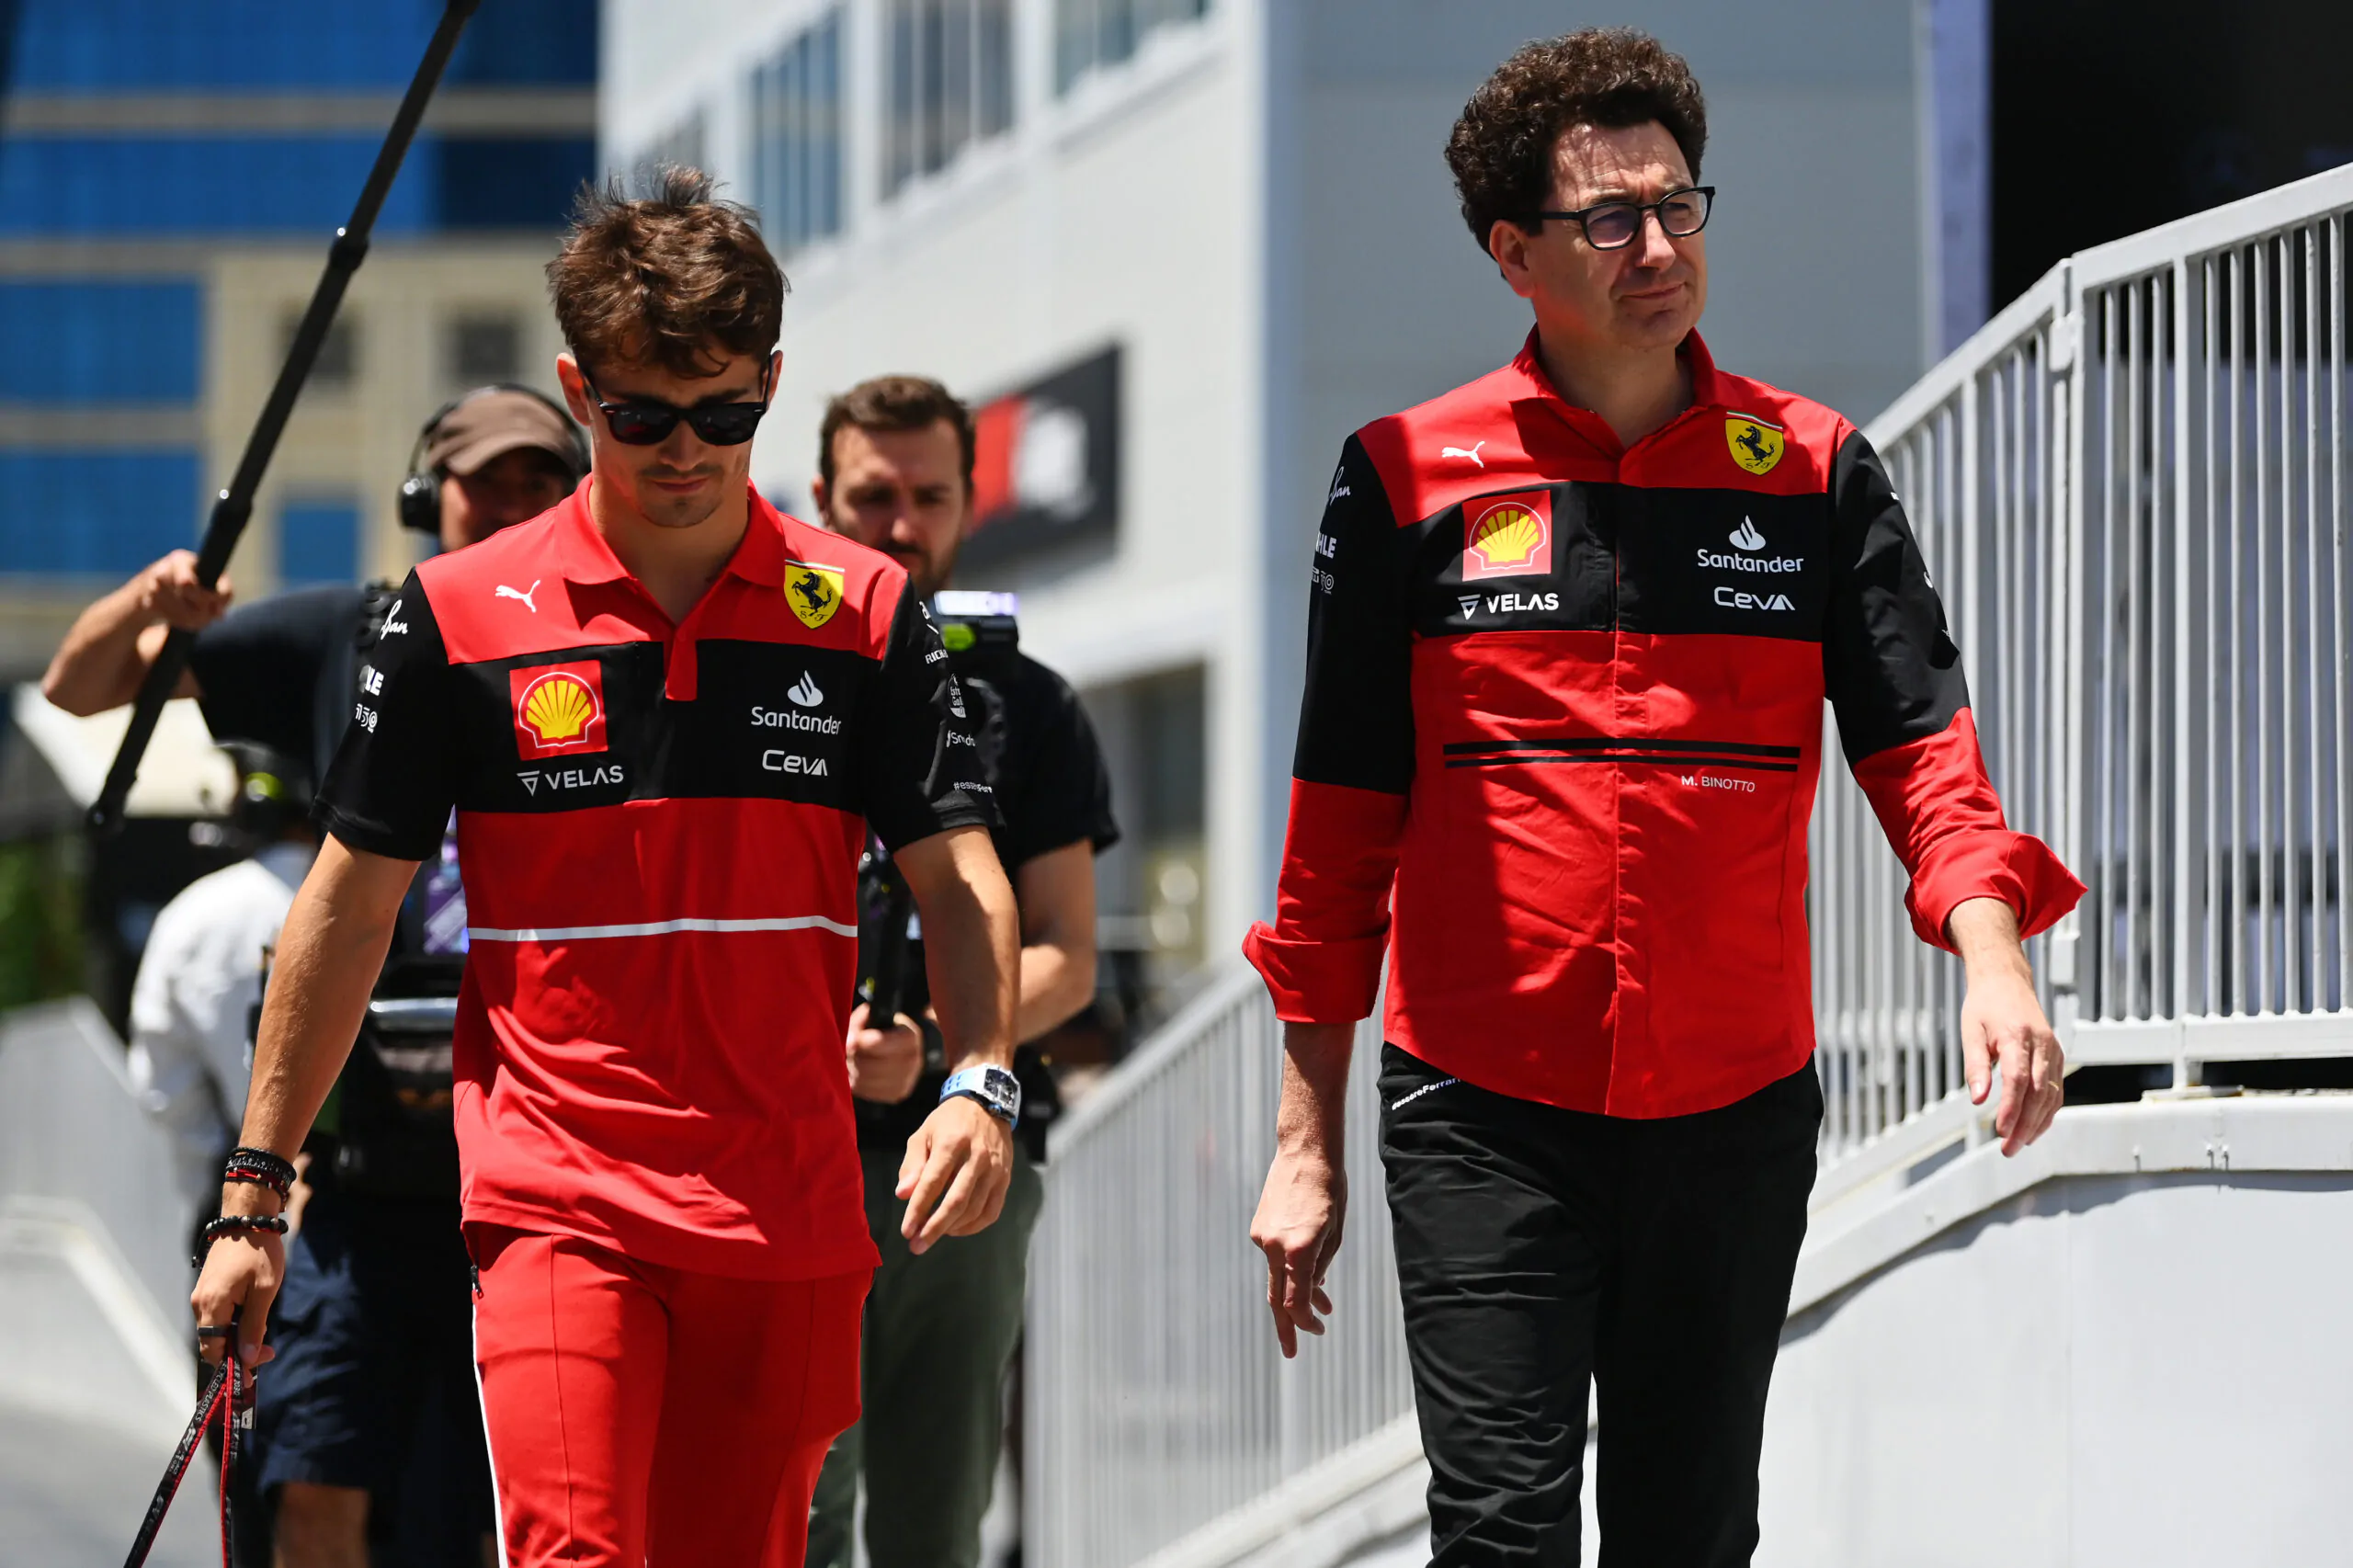 Annunciate le dimissioni in casa Ferrari: arriva l’ufficialità!